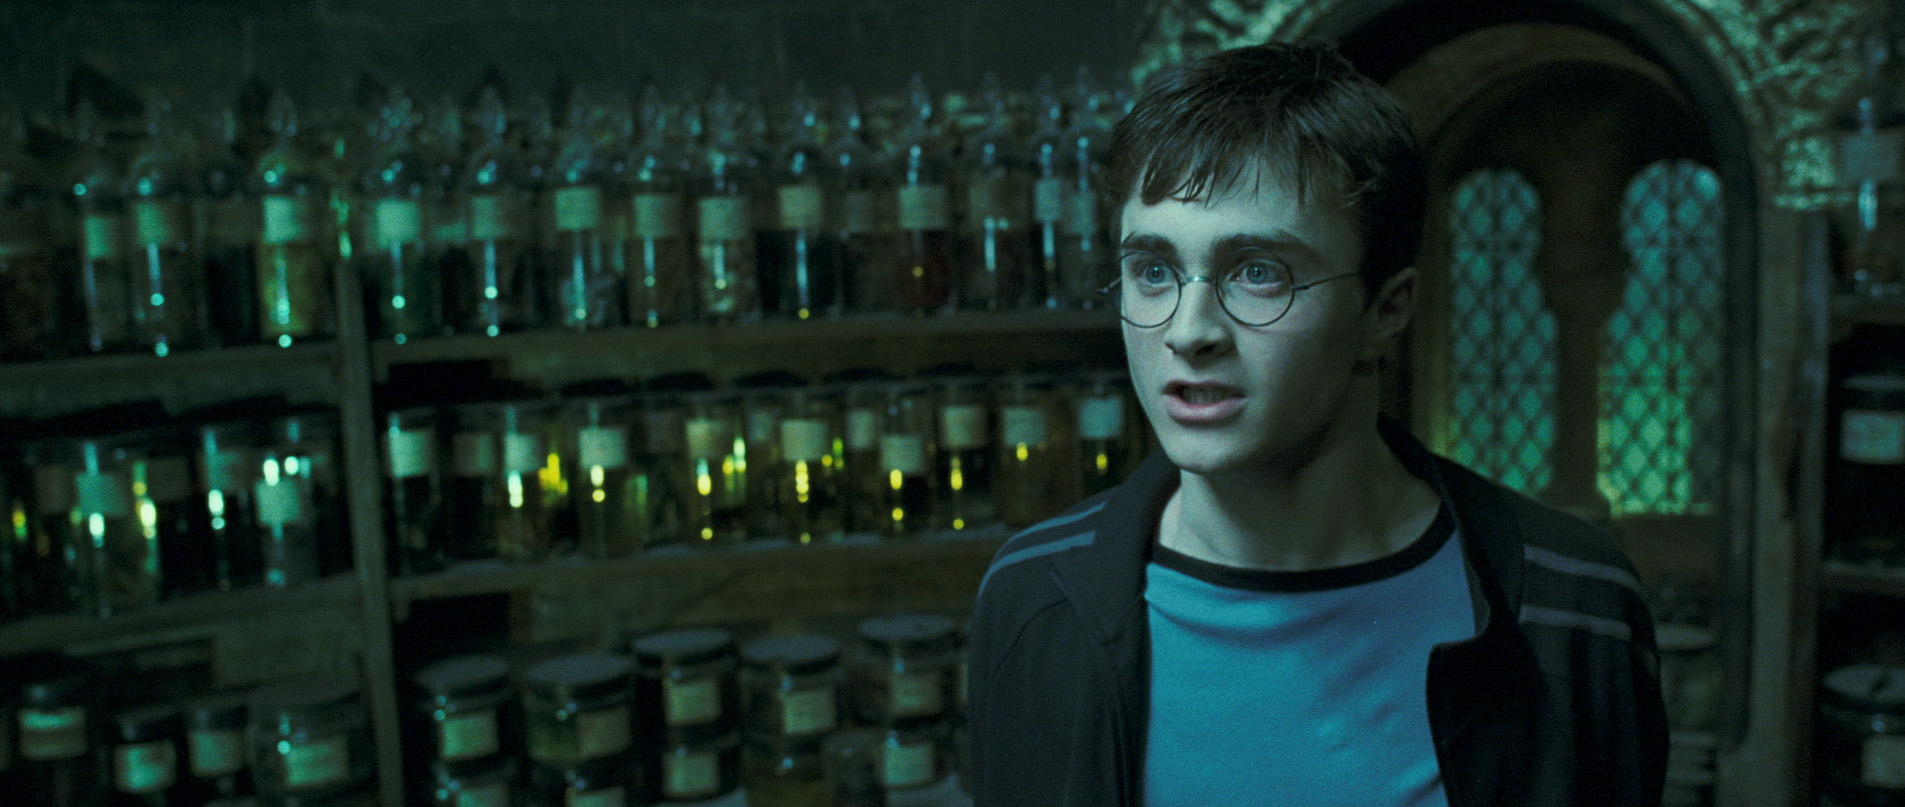 Гарри поттер и орден феникса фото из фильма